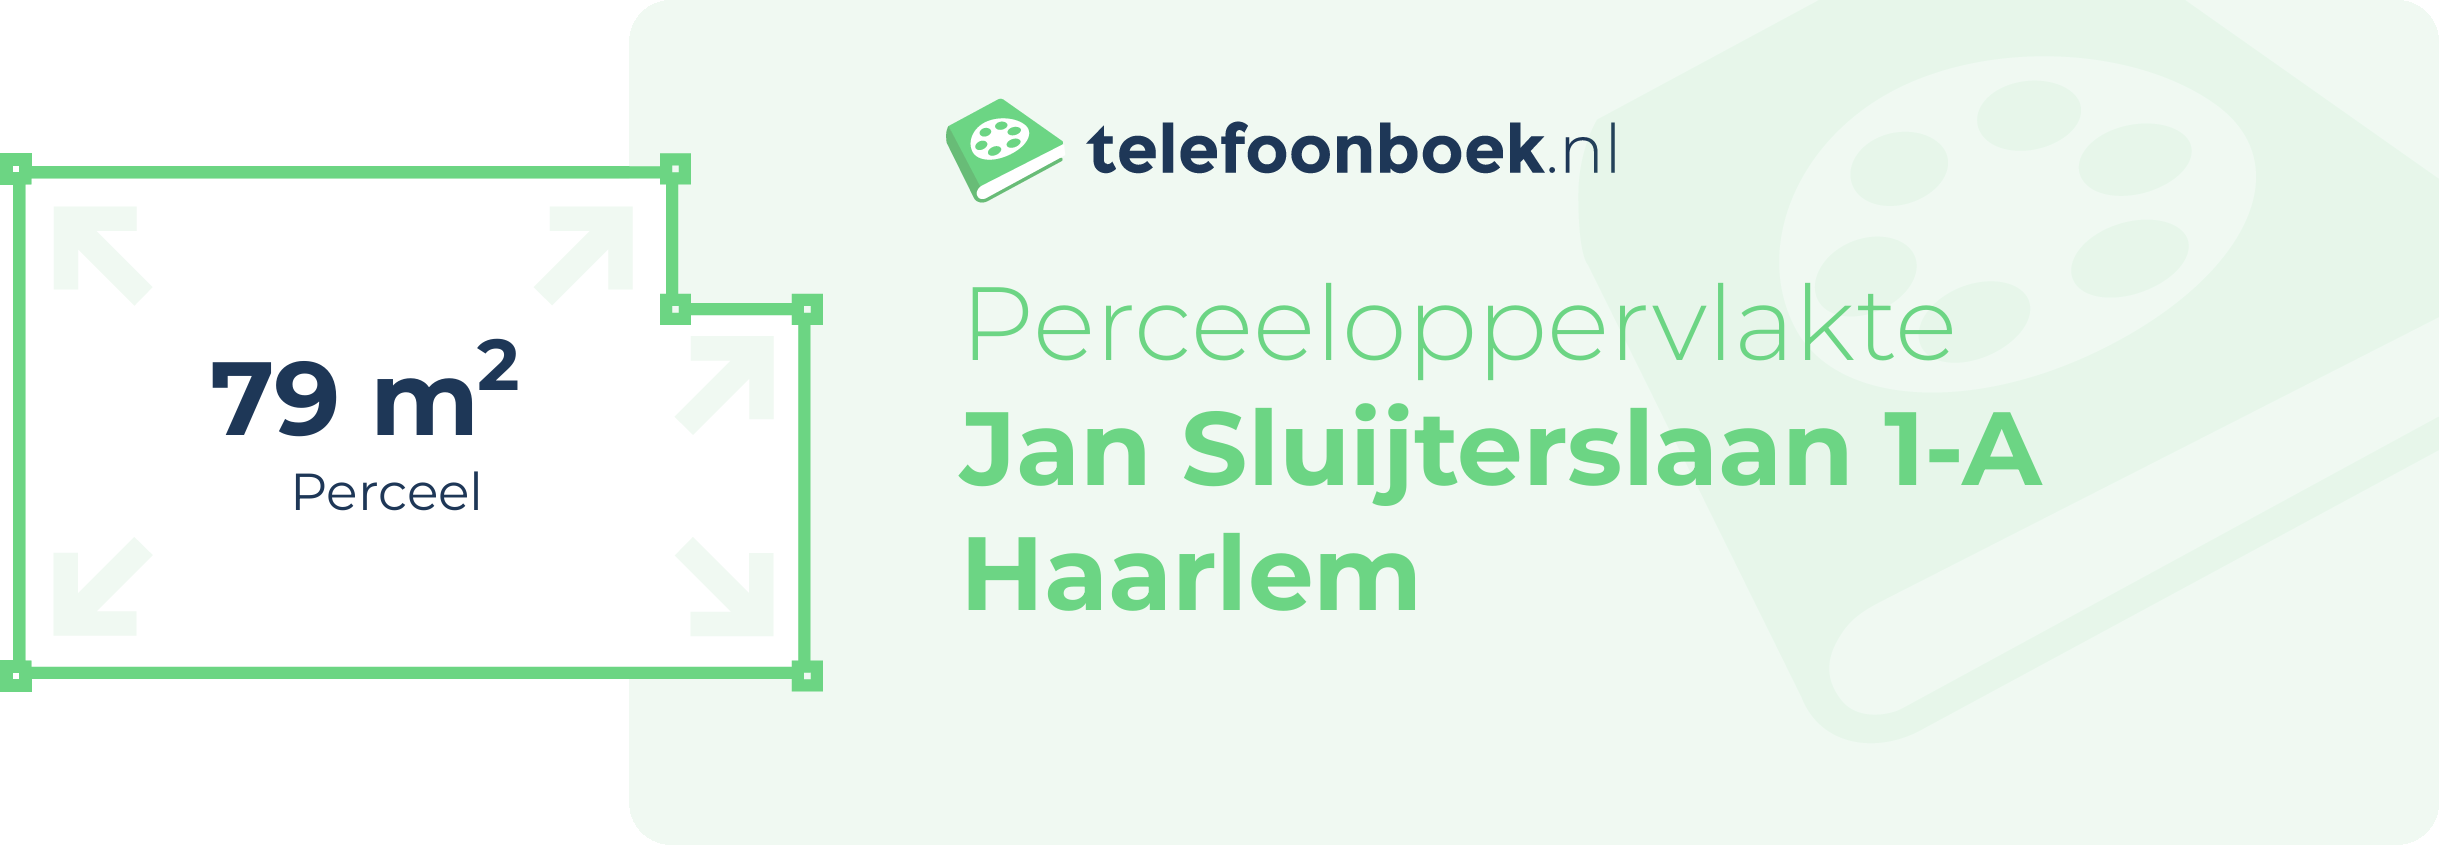 Perceeloppervlakte Jan Sluijterslaan 1-A Haarlem